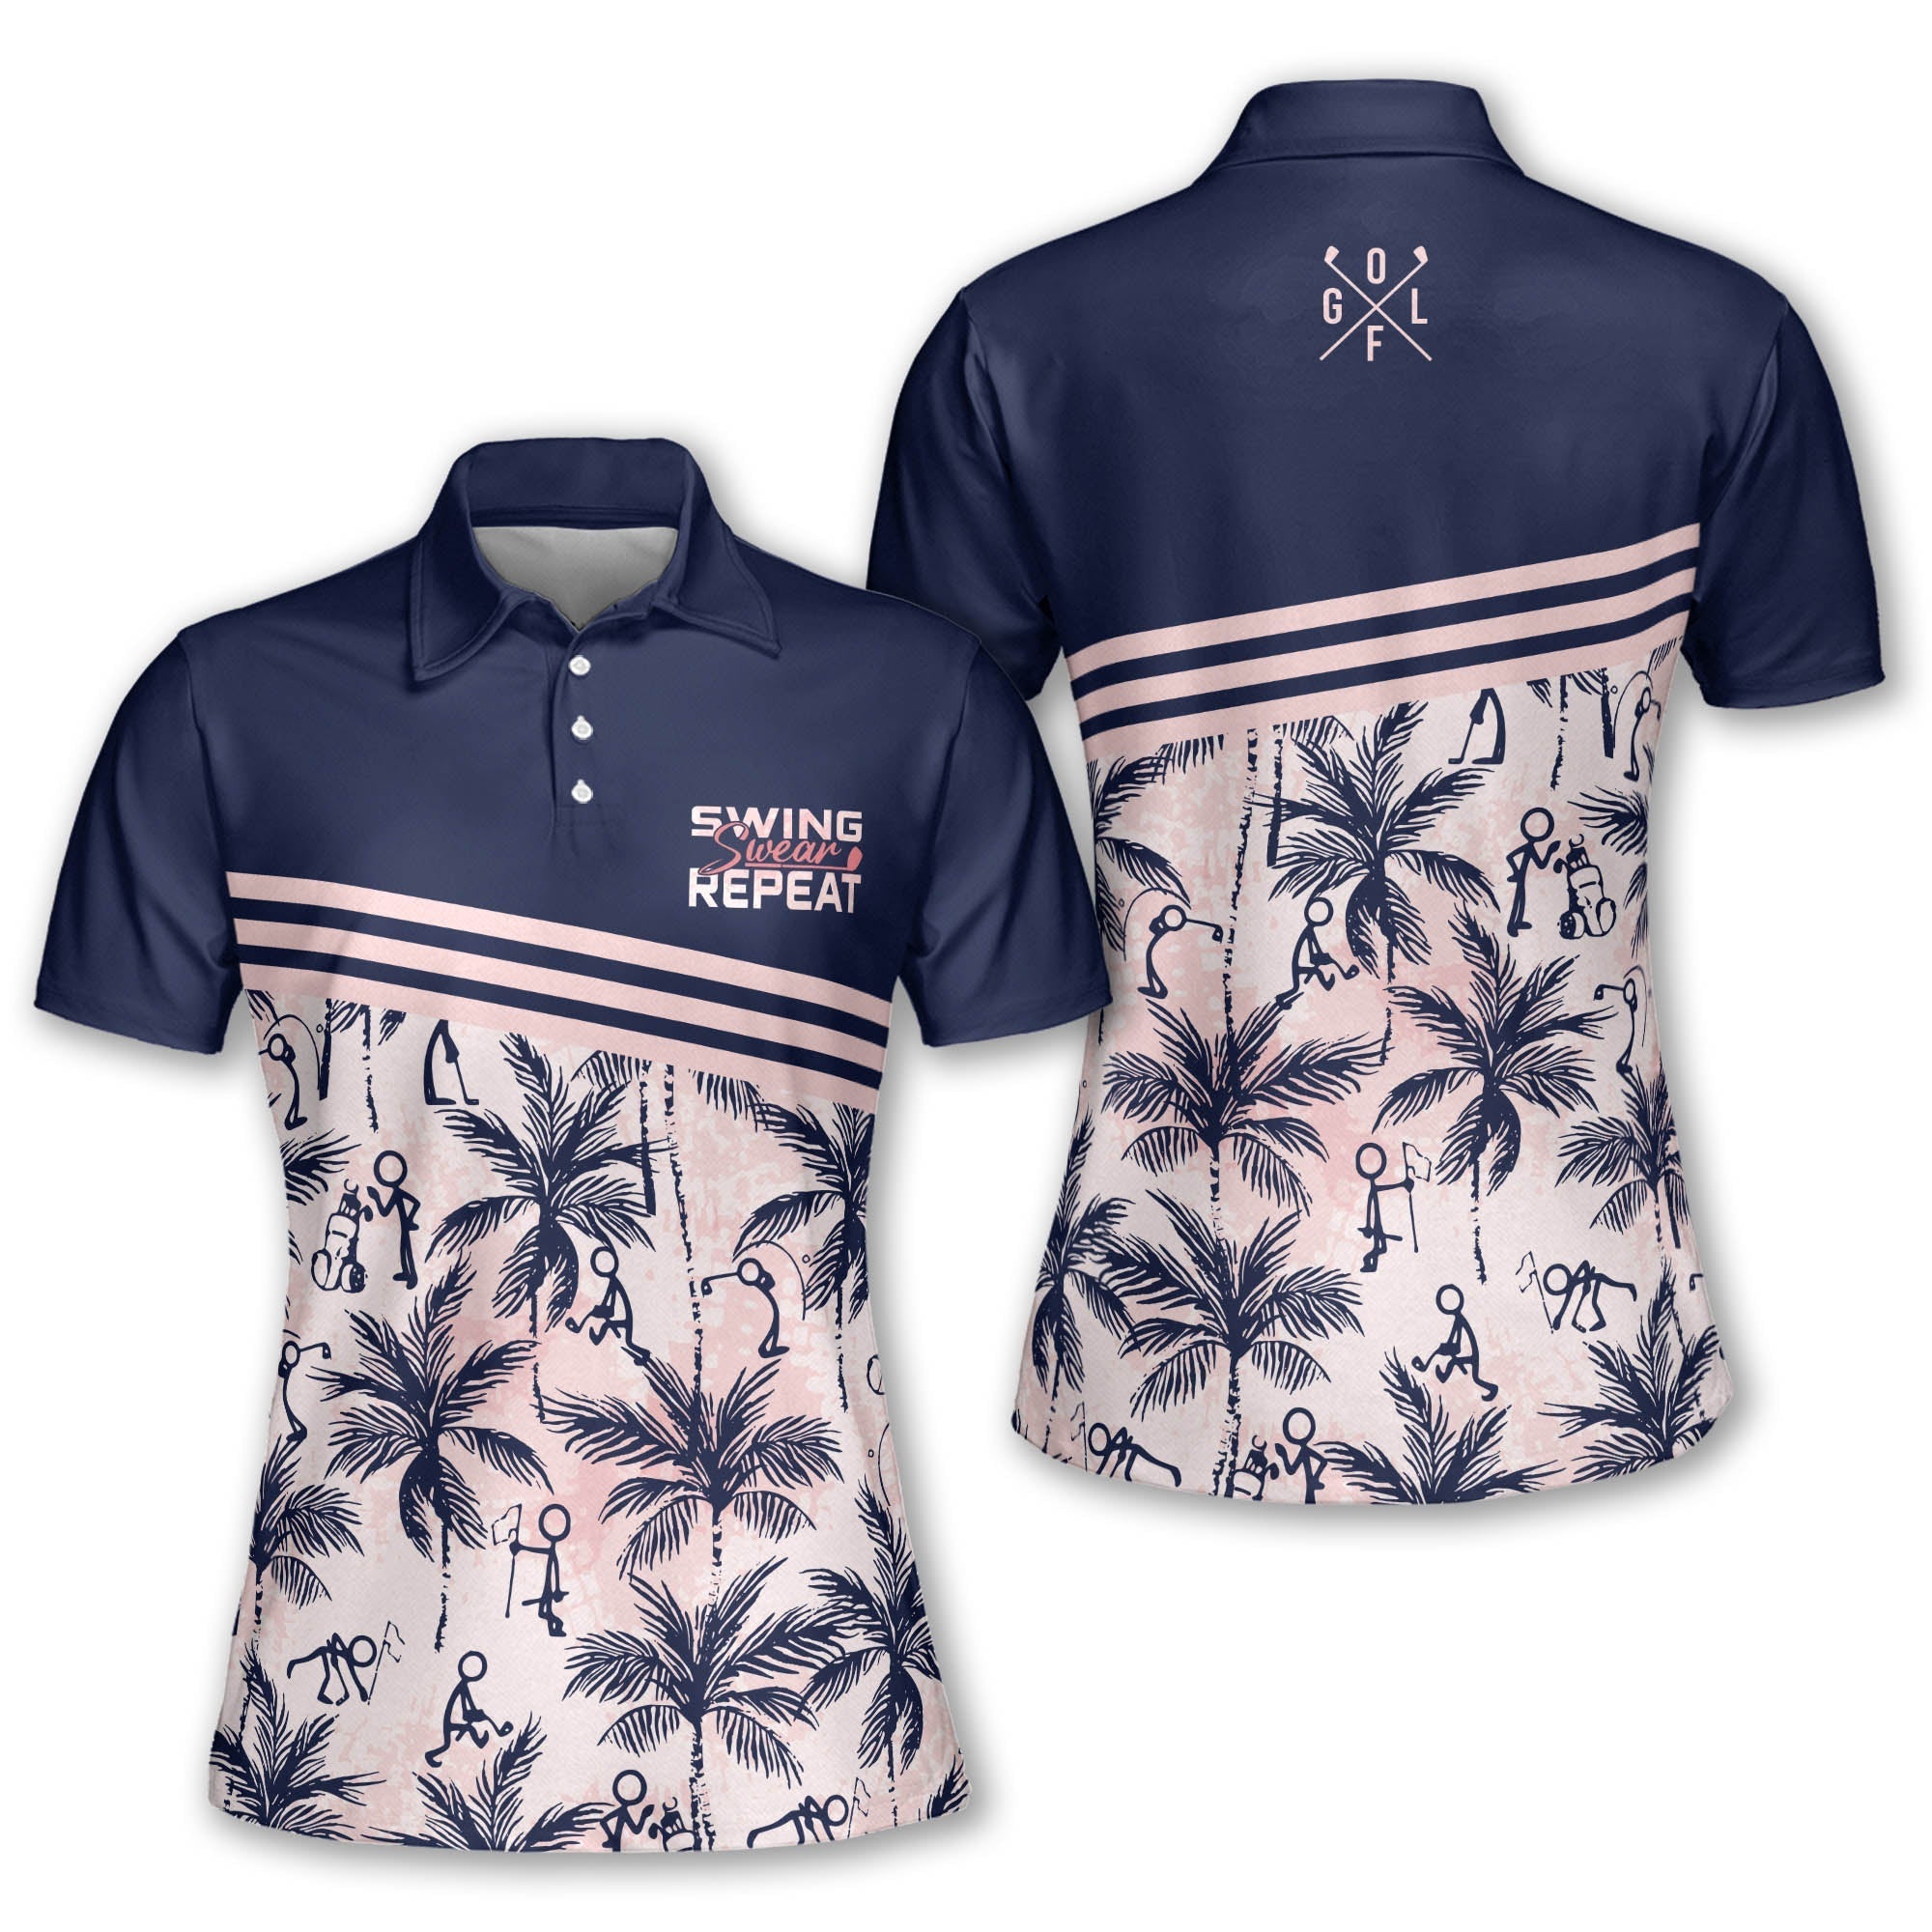 Swing Swear Repeat Golf Figures Short Sleeve Polo Shirt Sleeveless Polo Shirt